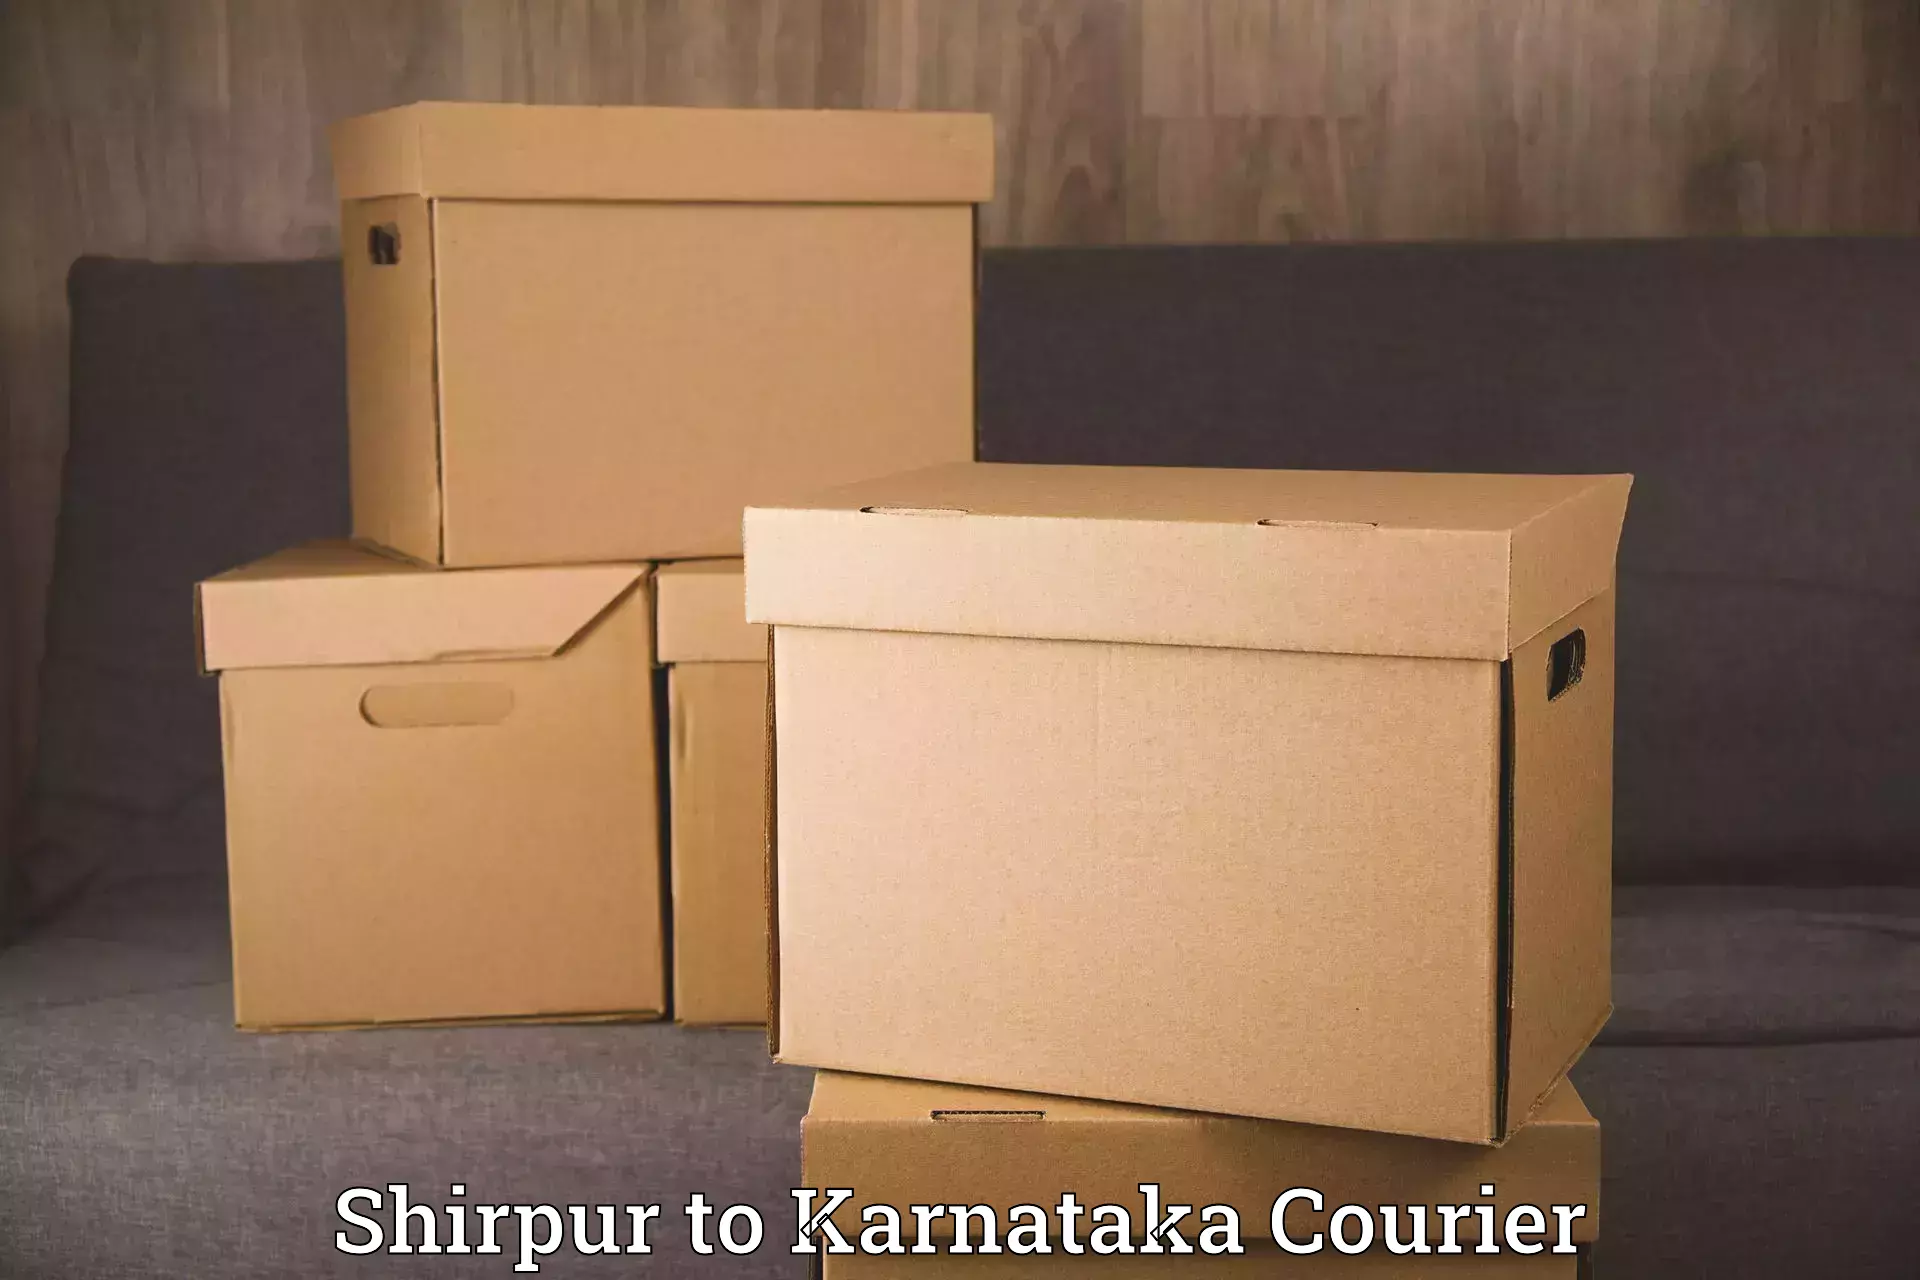 Professional moving company Shirpur to Yellare